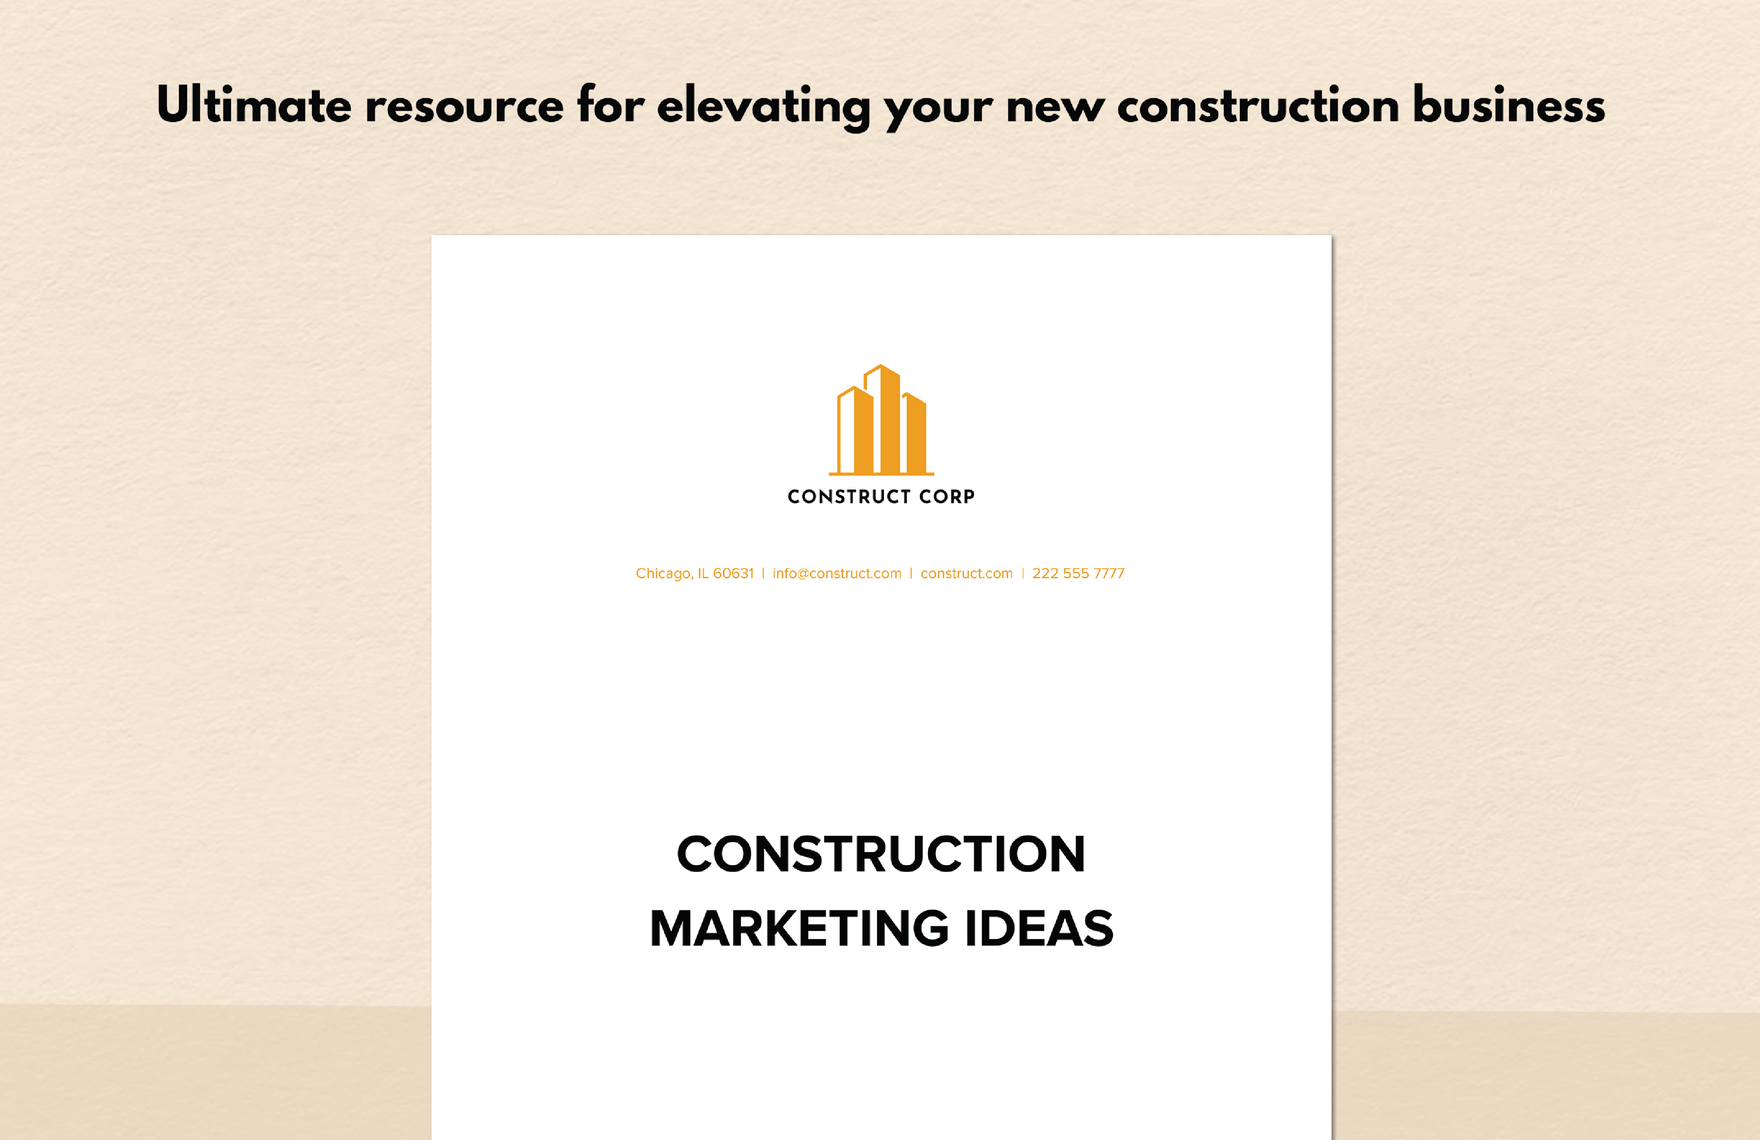 Construction Marketing Ideas